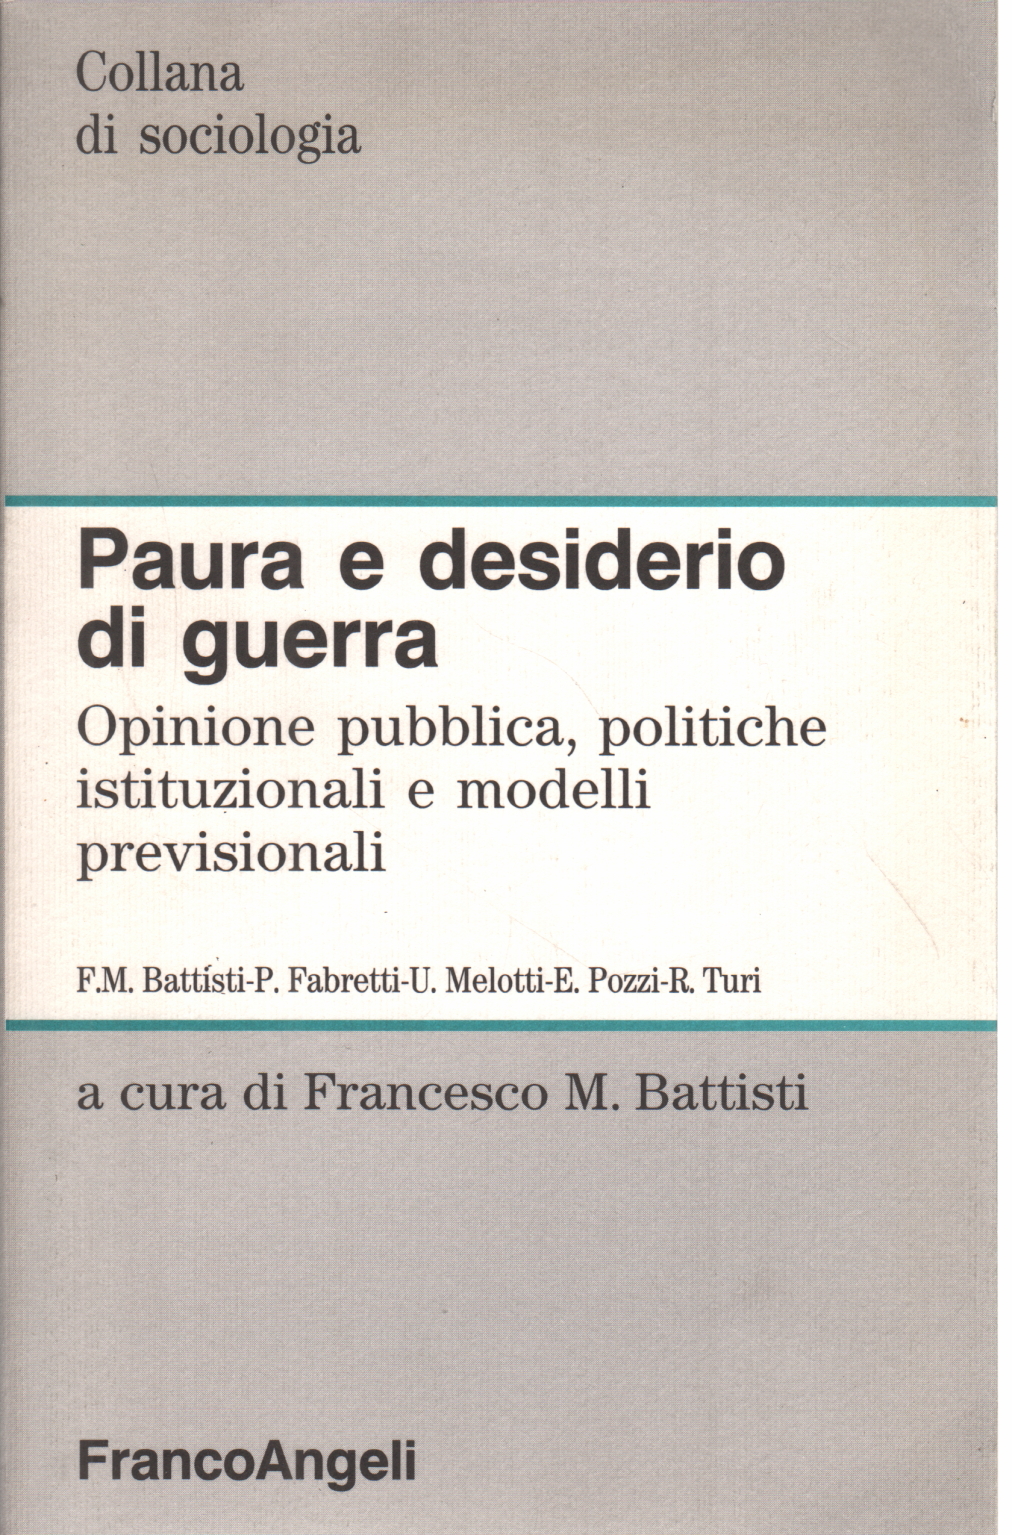 Fear and desire war, Francesco M. Battisti